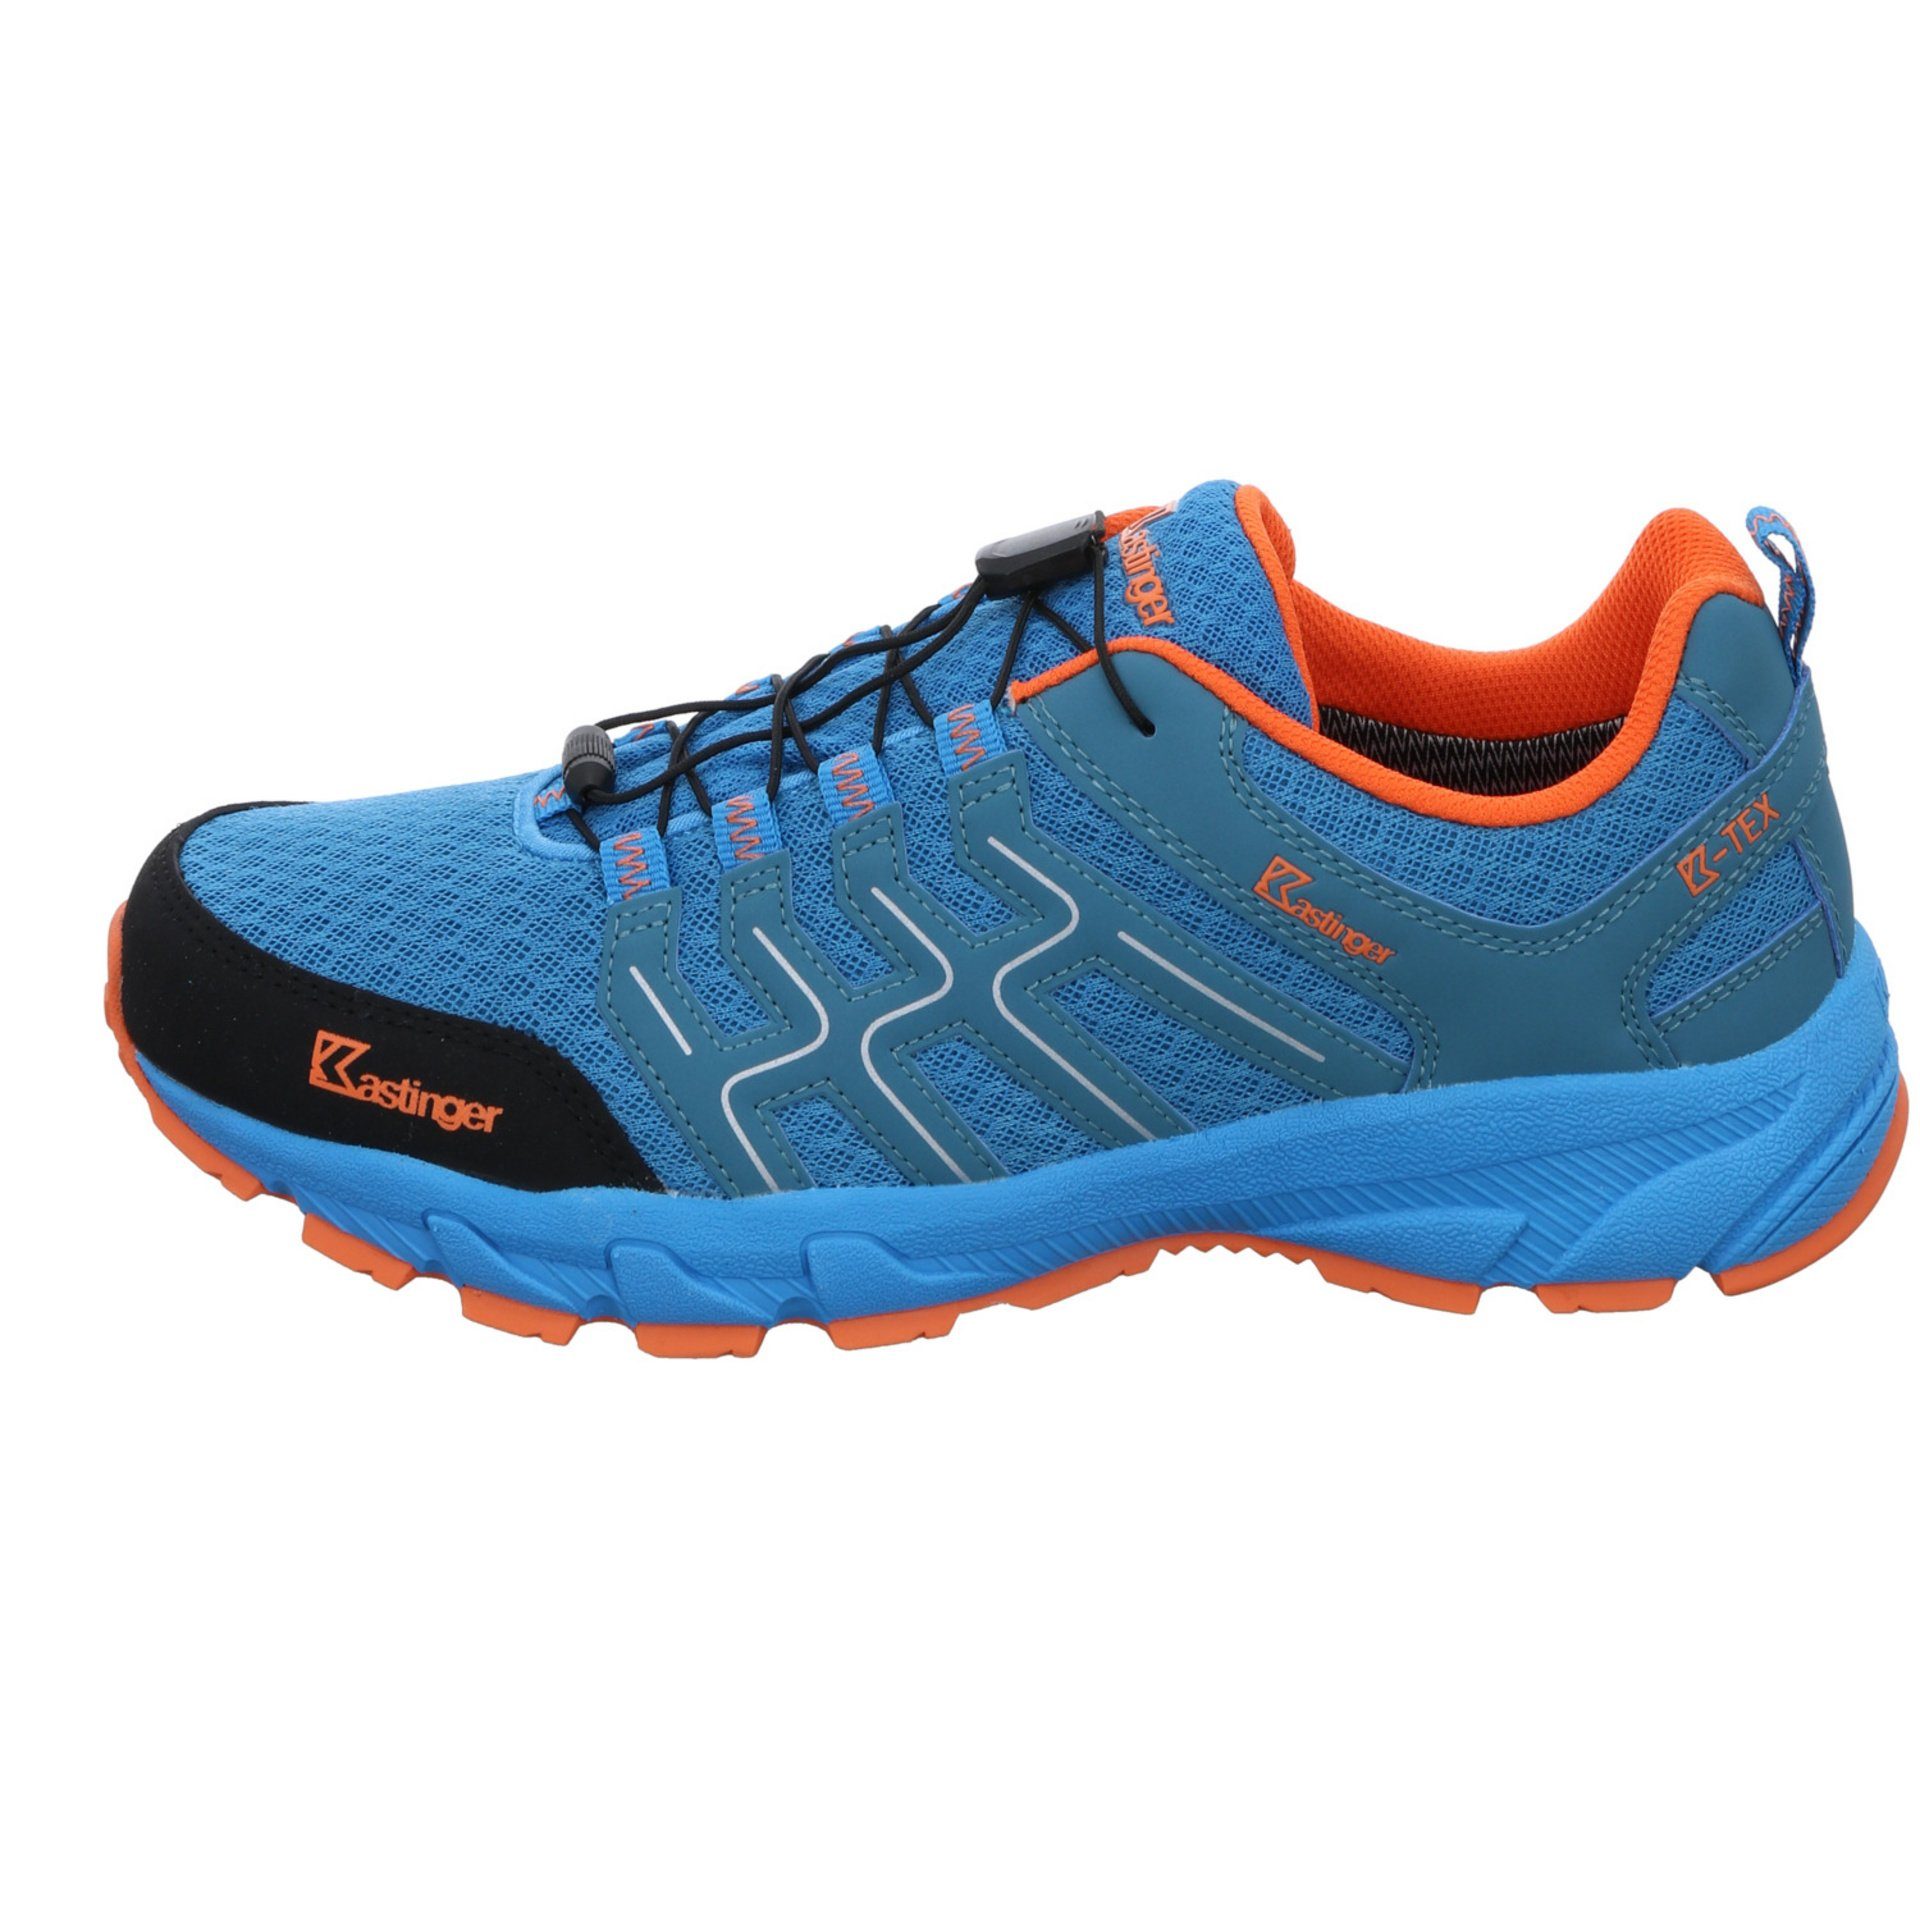 Synthetikkombination blue/orange Outdoorschuh Damen Trailrunner Kastinger Outdoorschuh Outdoor Schuhe